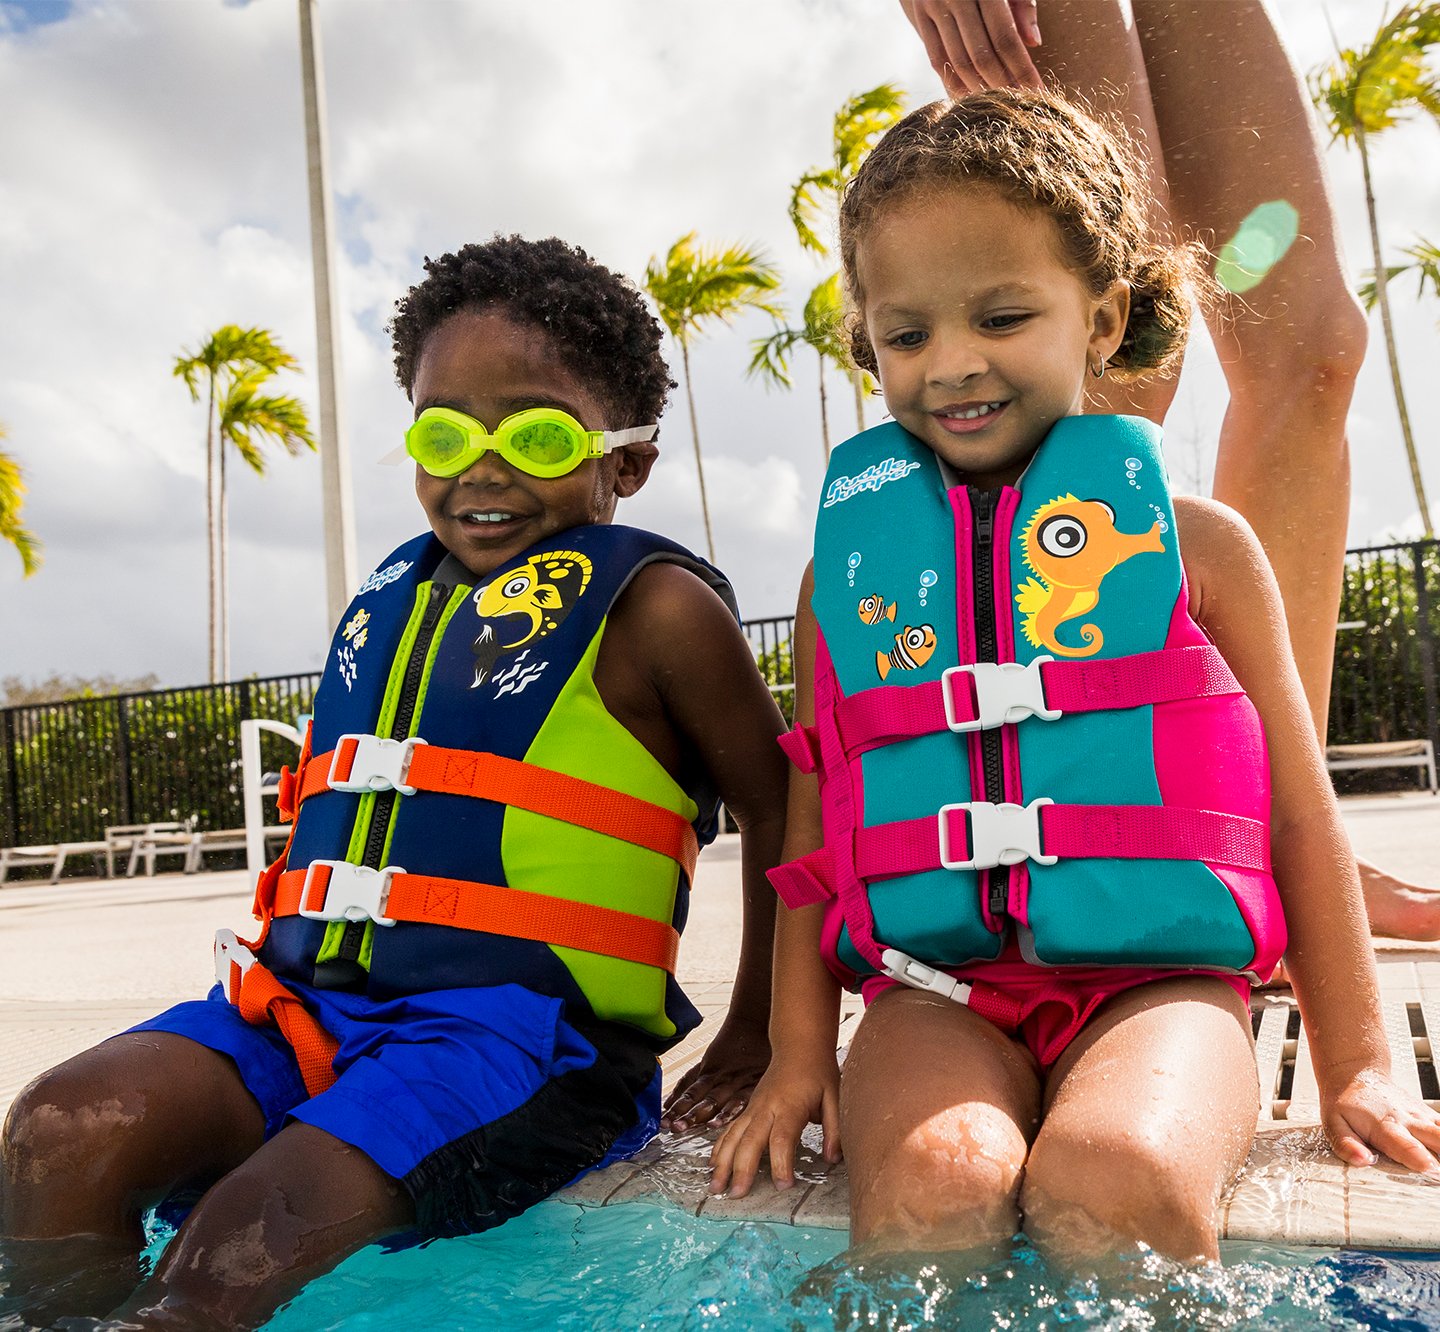 Kids Swim Children Float Vest - Toddler Baby Youth Floating Jacket